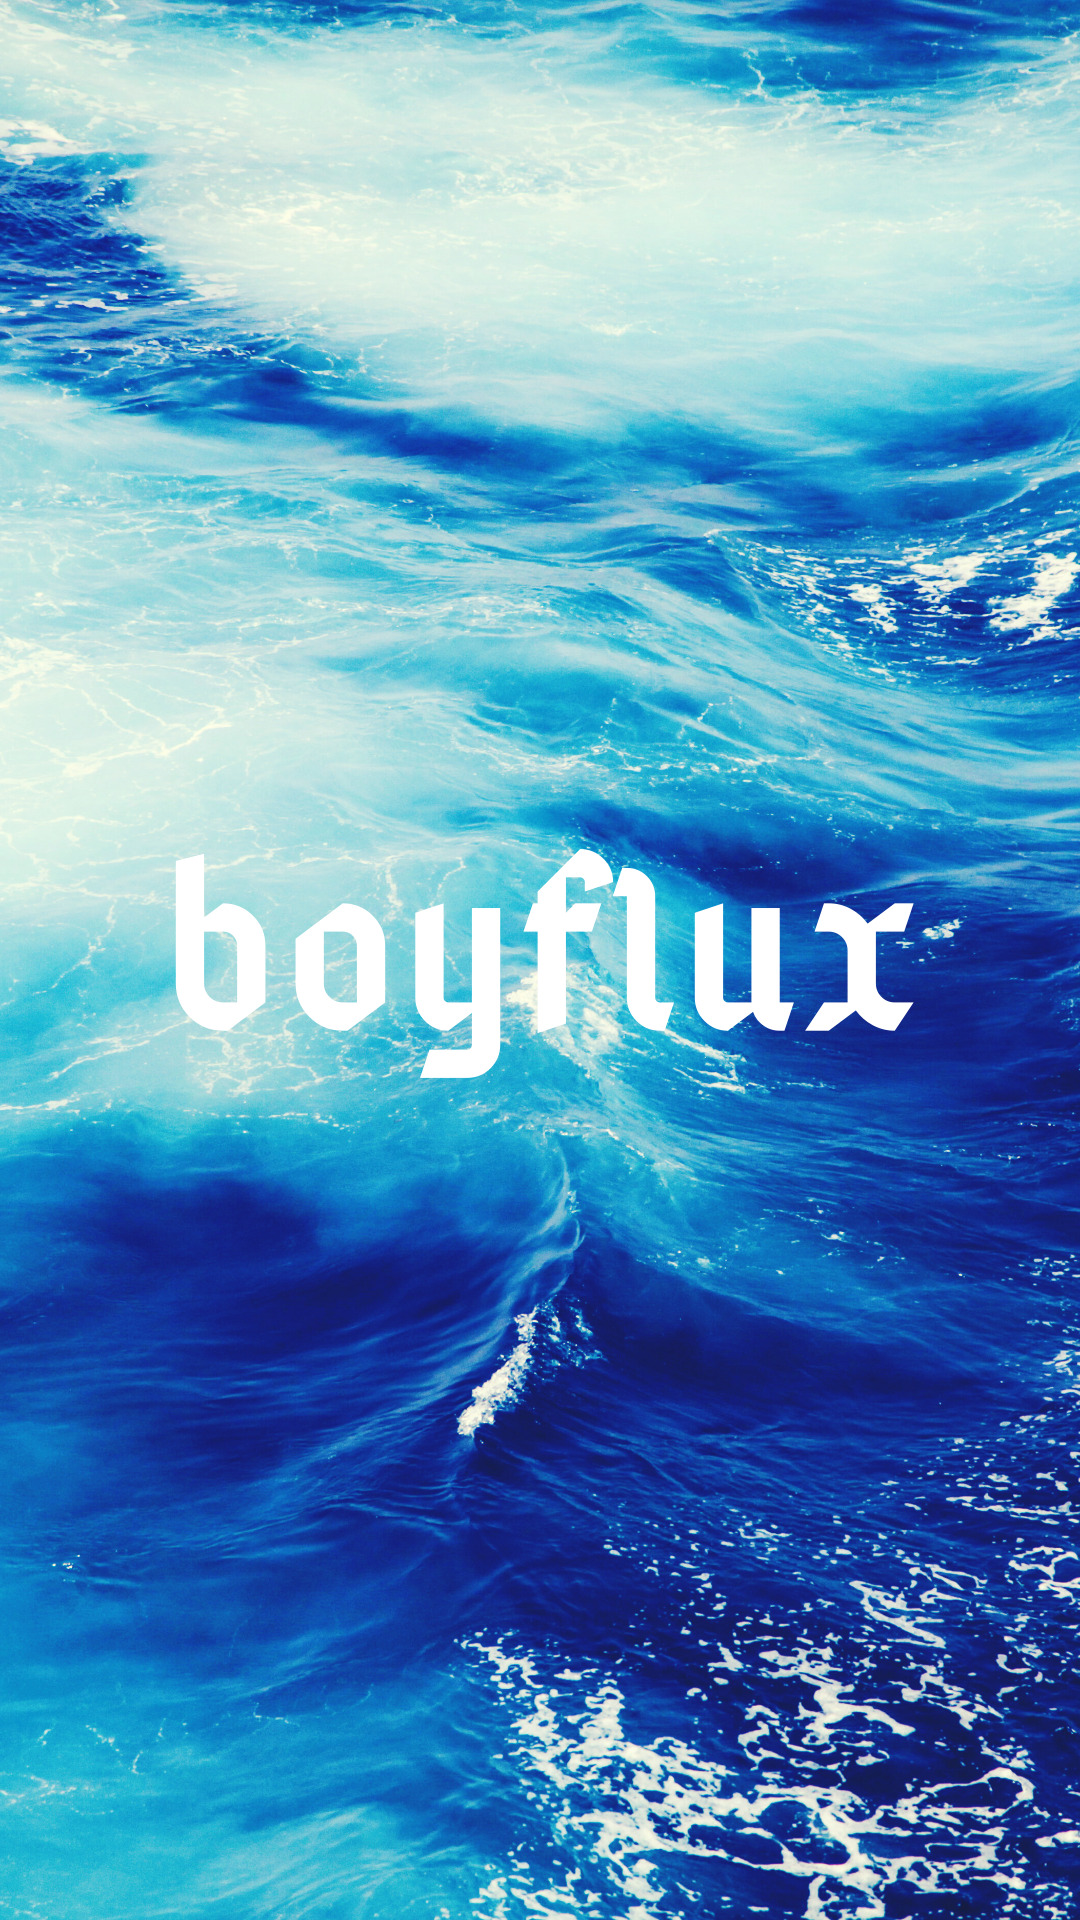 Boyflux logo on a blue wave background - Vogue